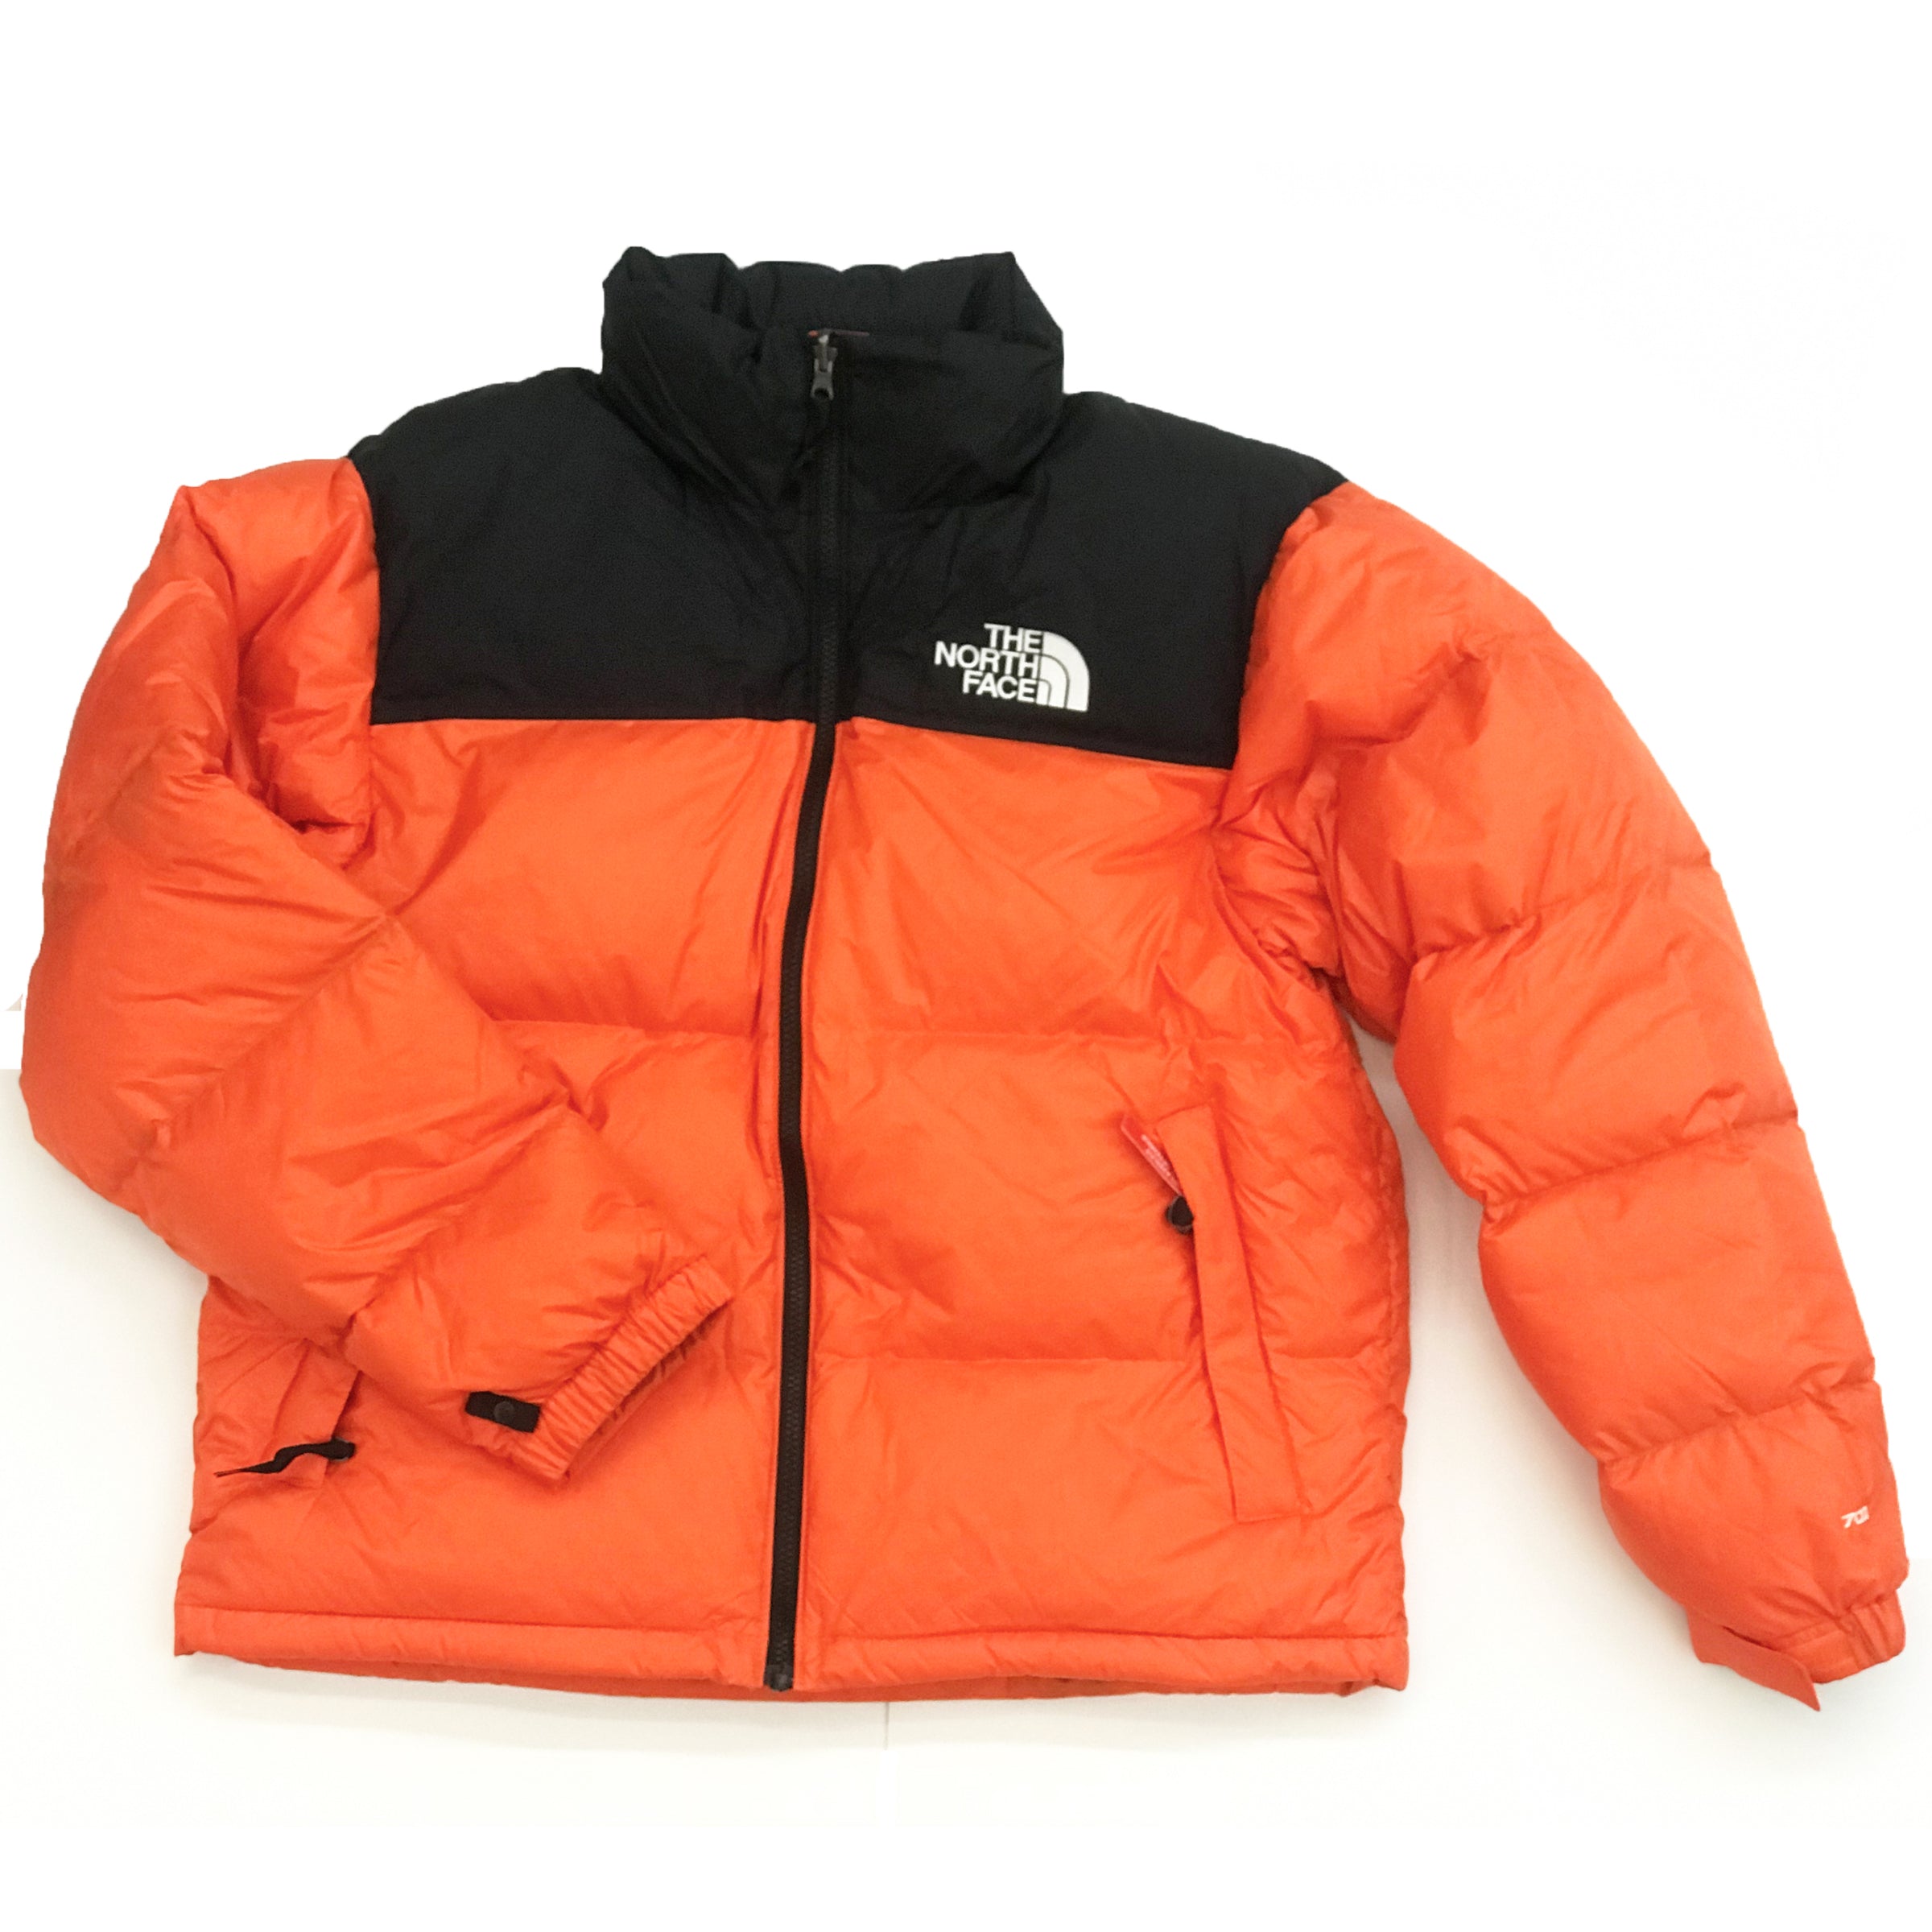 the north face 1996 retro nuptse jacket orange